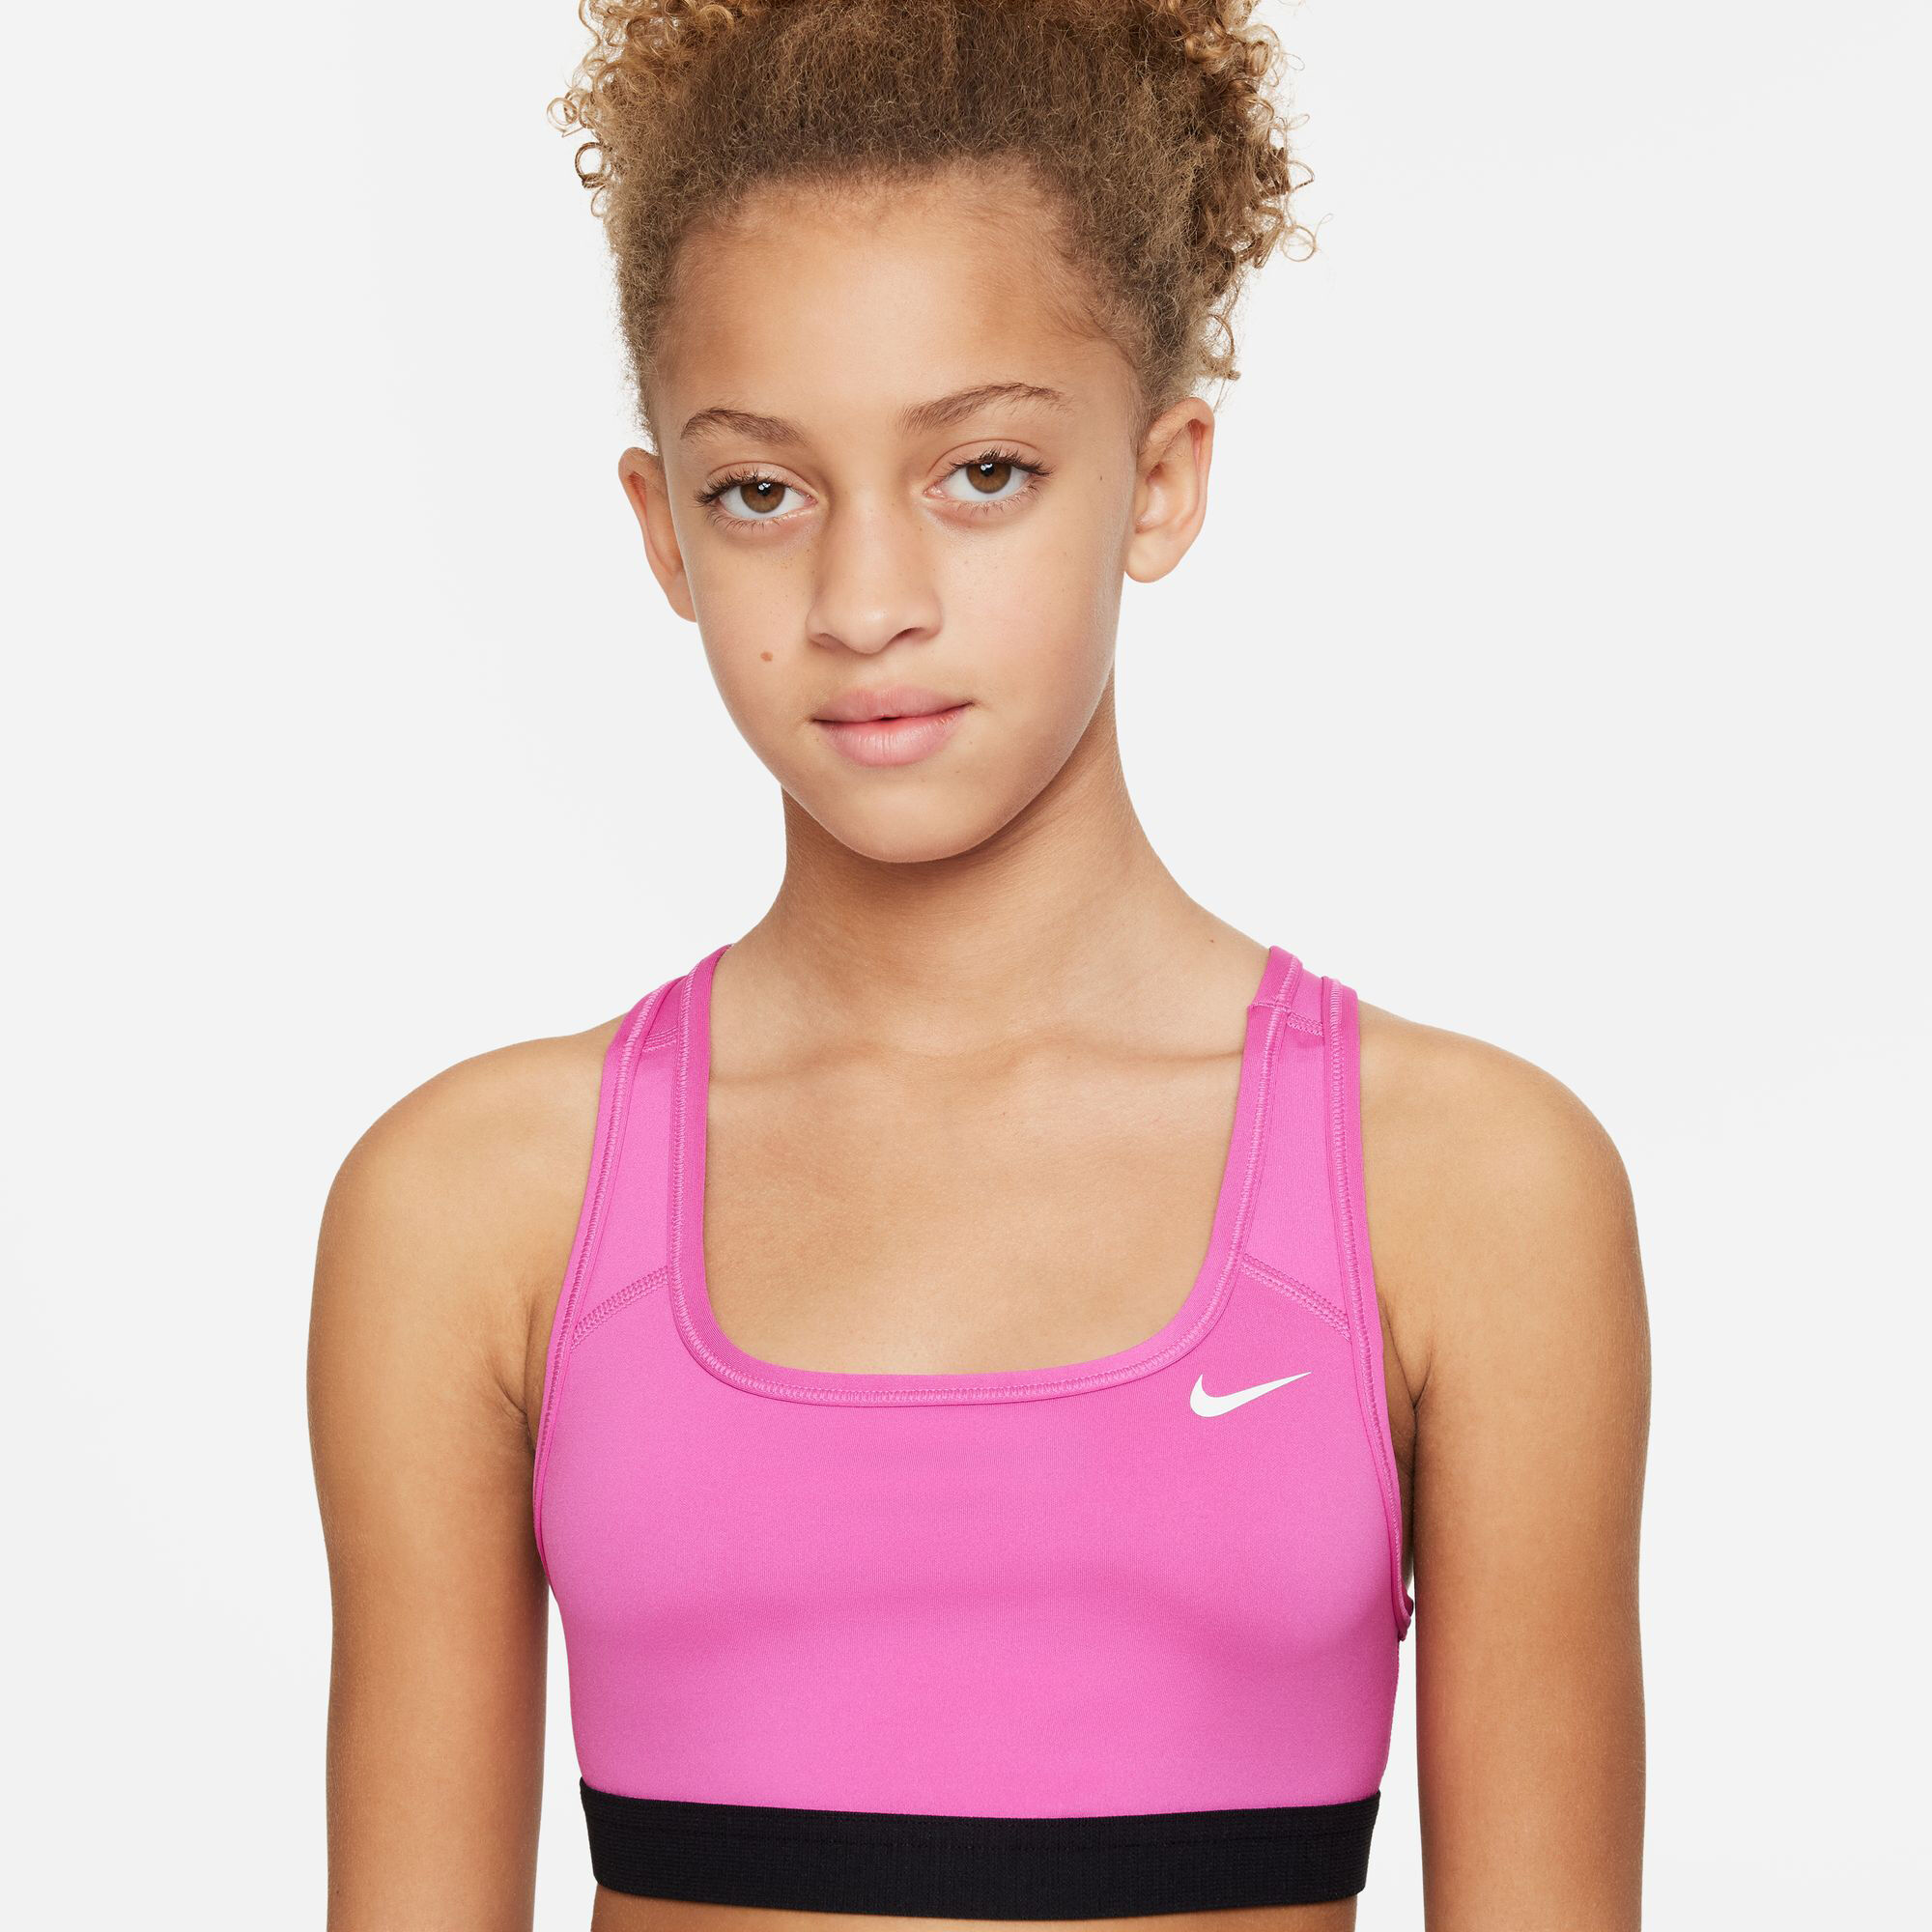 Nike Pro Swoosh Girls' Sports Bra